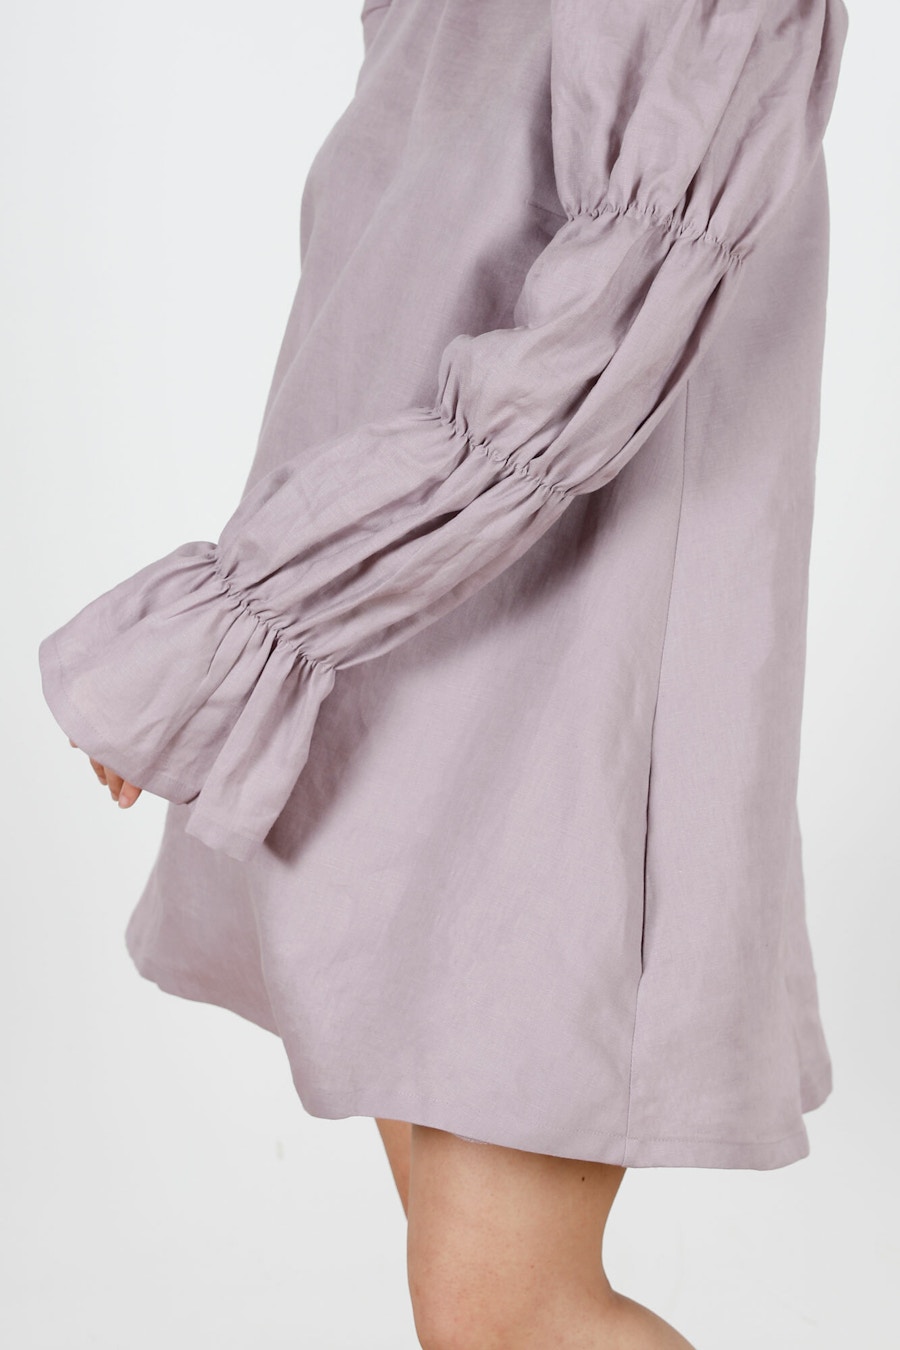 Sleeve Veronika Tucker Freya Dress The Fabric Store Blog